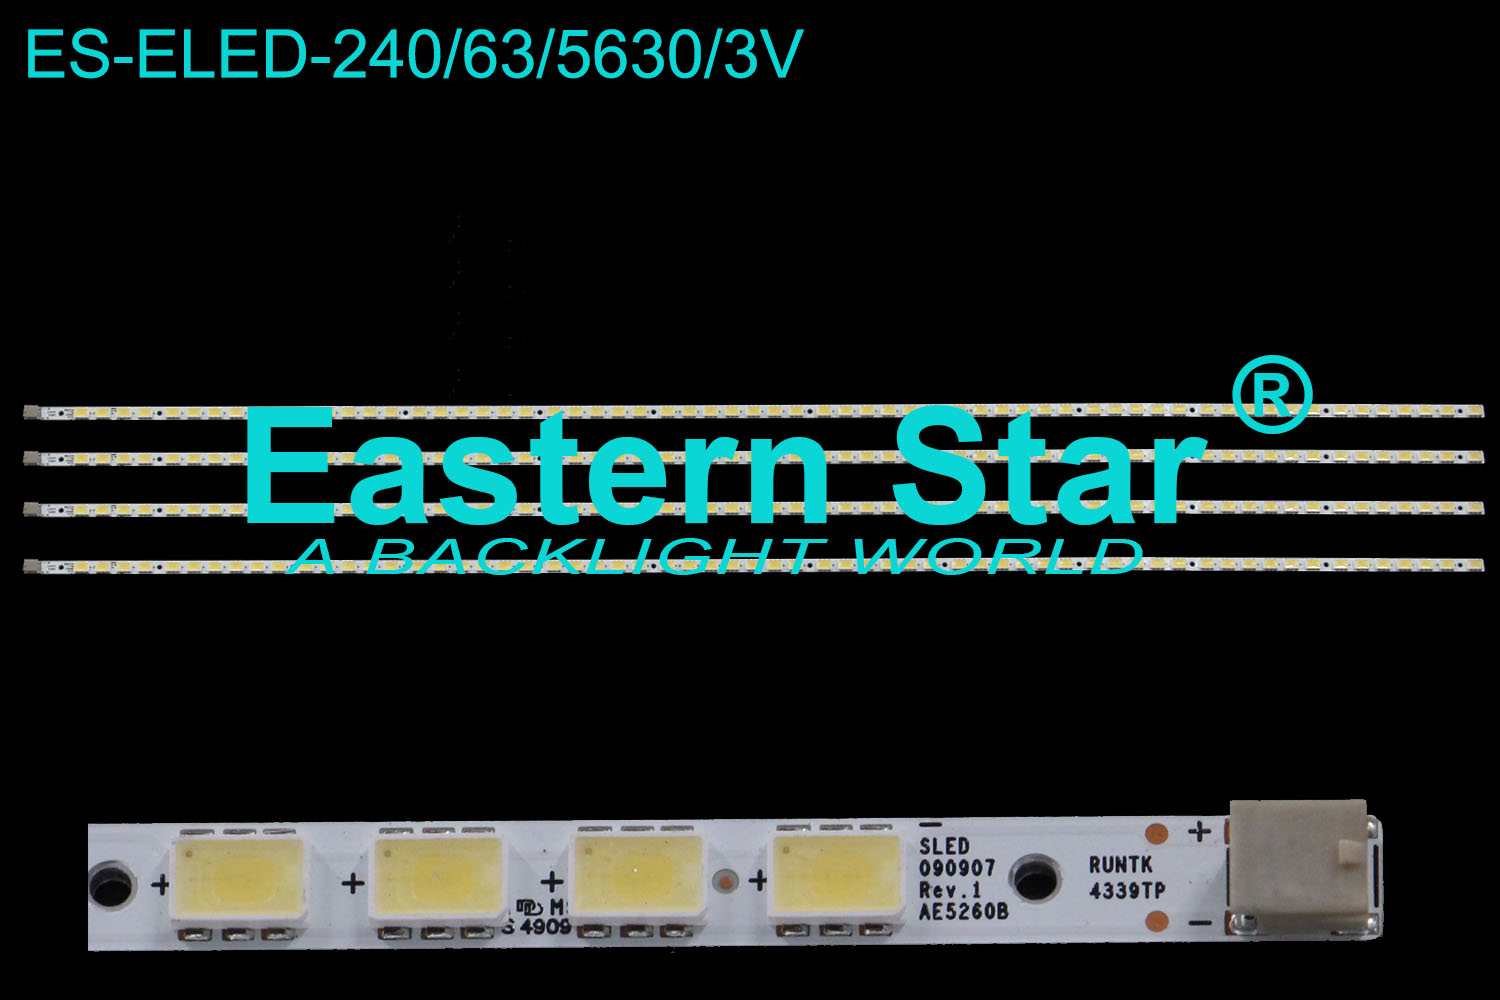 ES-ELED-240 ELED/EDGE TV backlight 52'' 63LEDs use for Sony SLED 090907 Rev.1 AE5260B RUNTK 4339TP LED STRIPS(4)